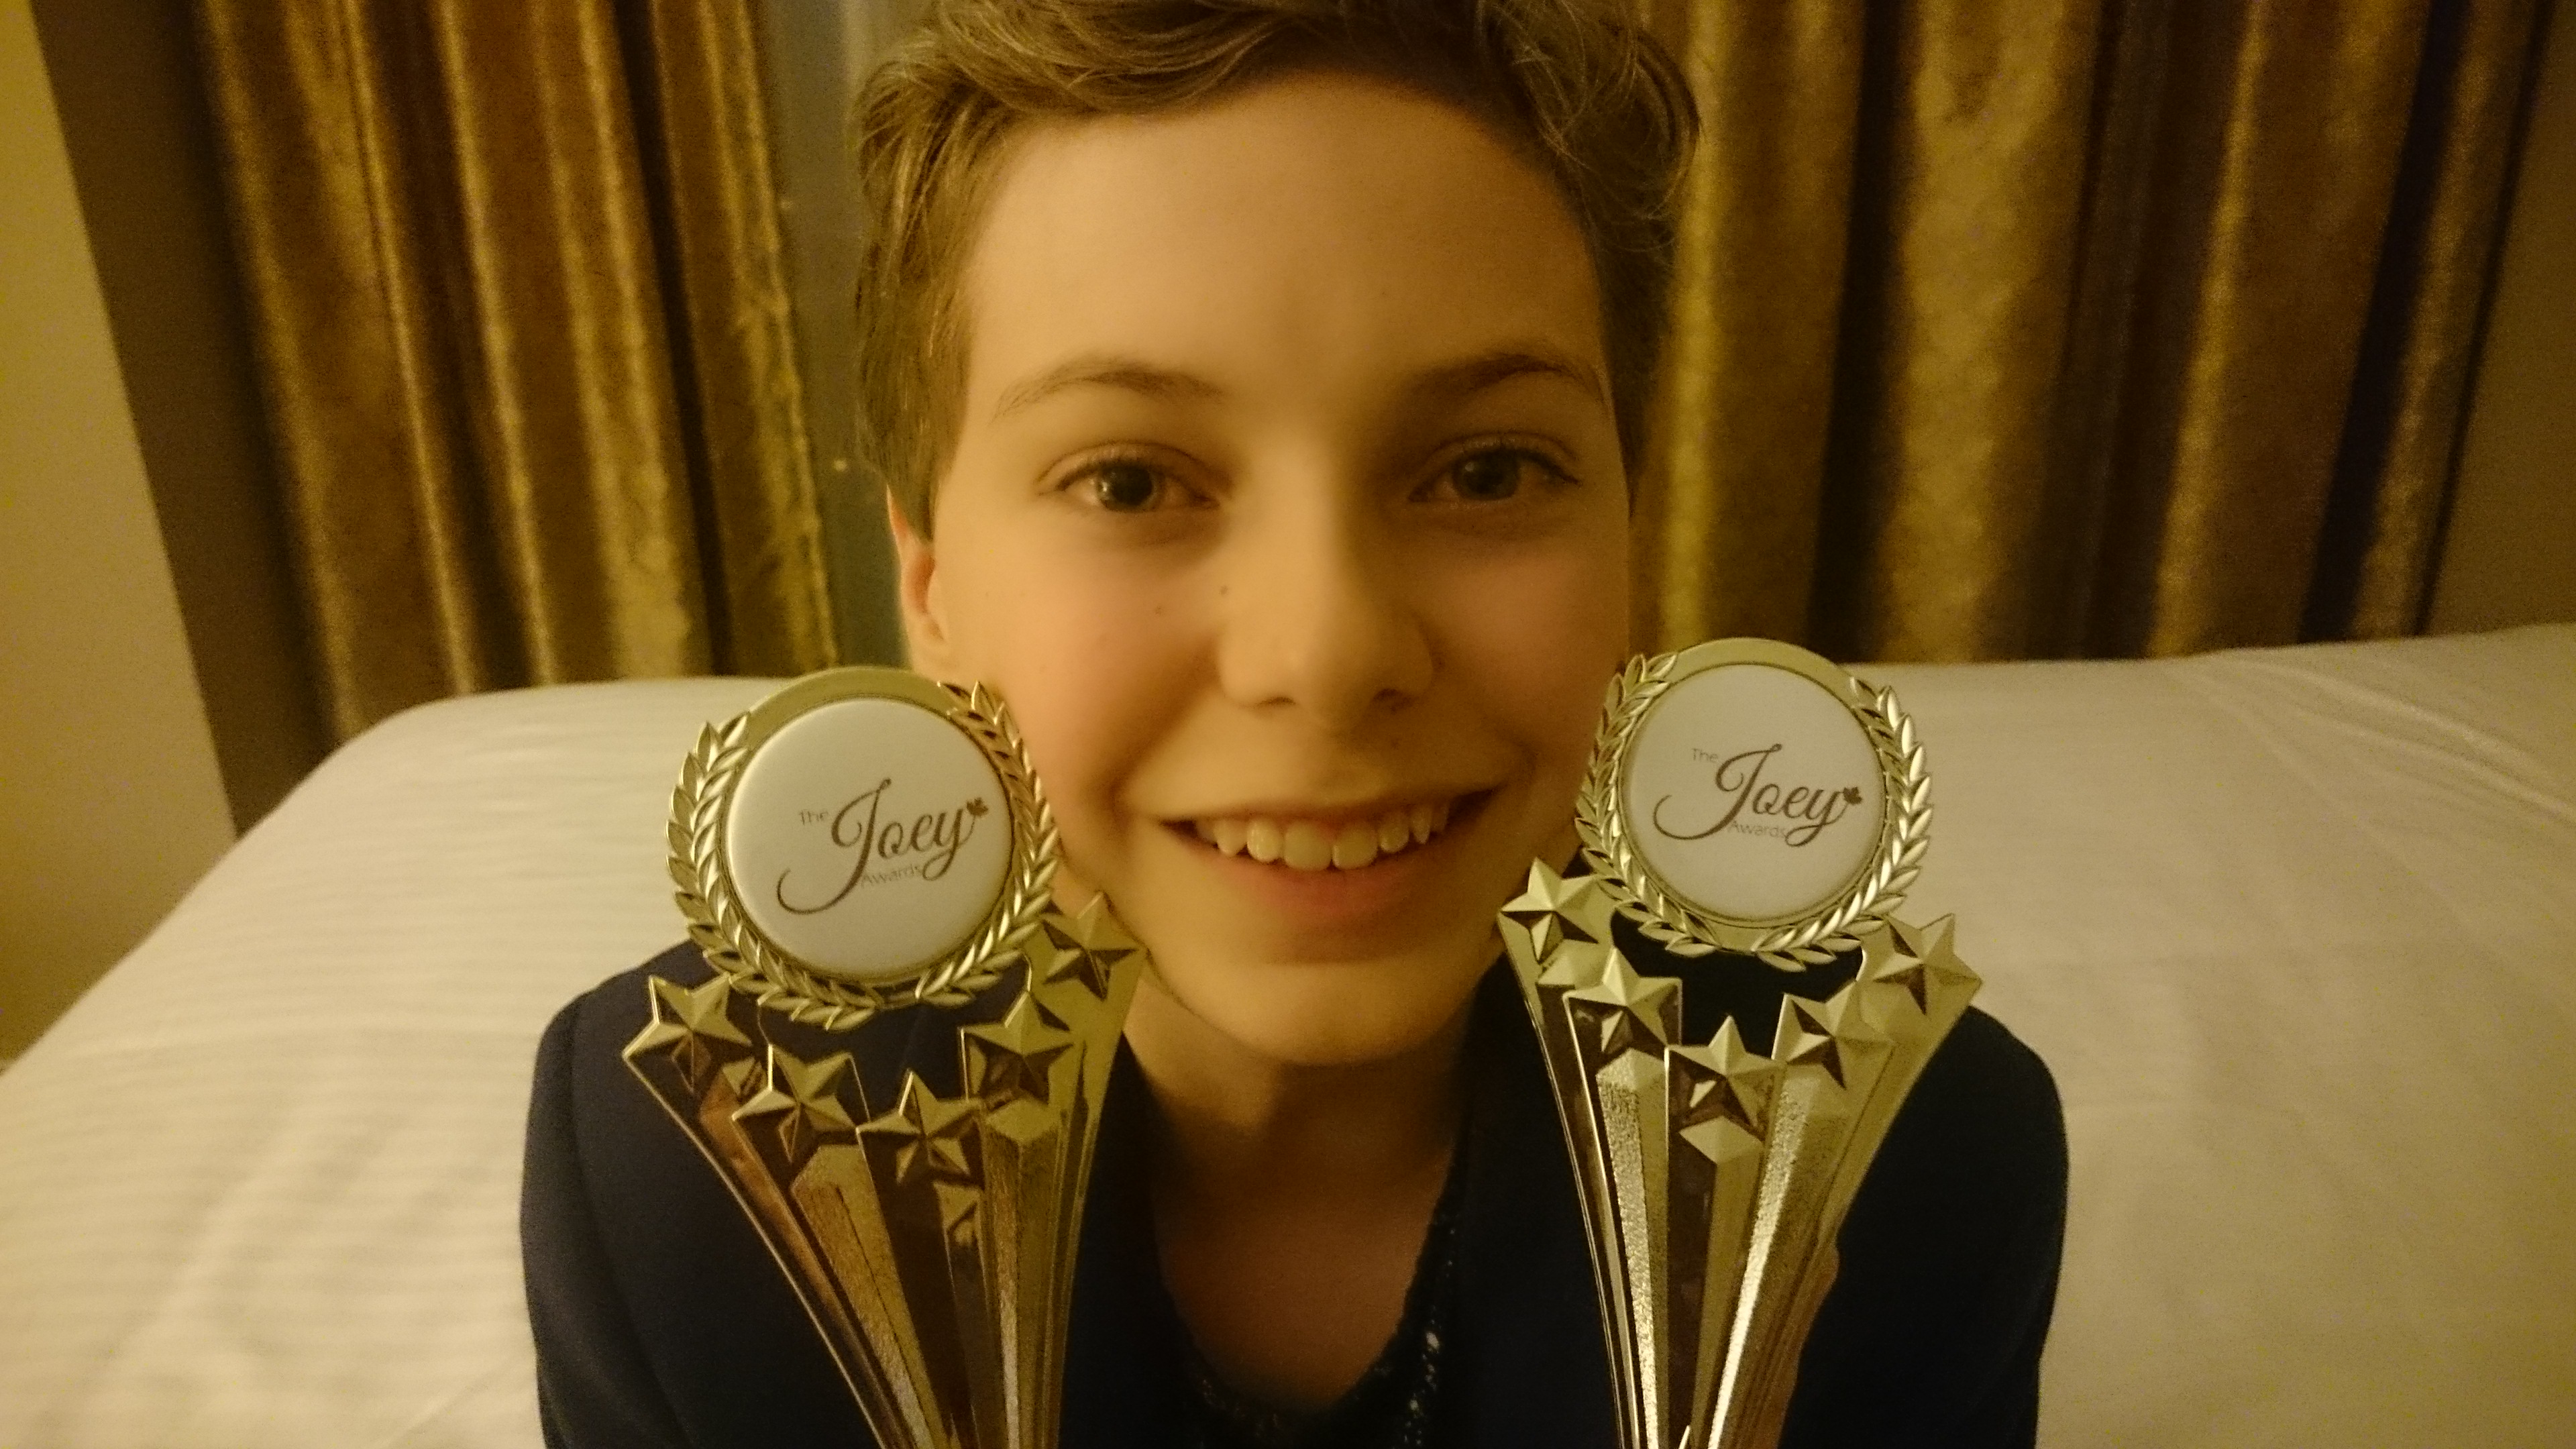 2015 Joey Award Winner for Paw Patrol (Nickelodeon) and PJ Masks (Disney)